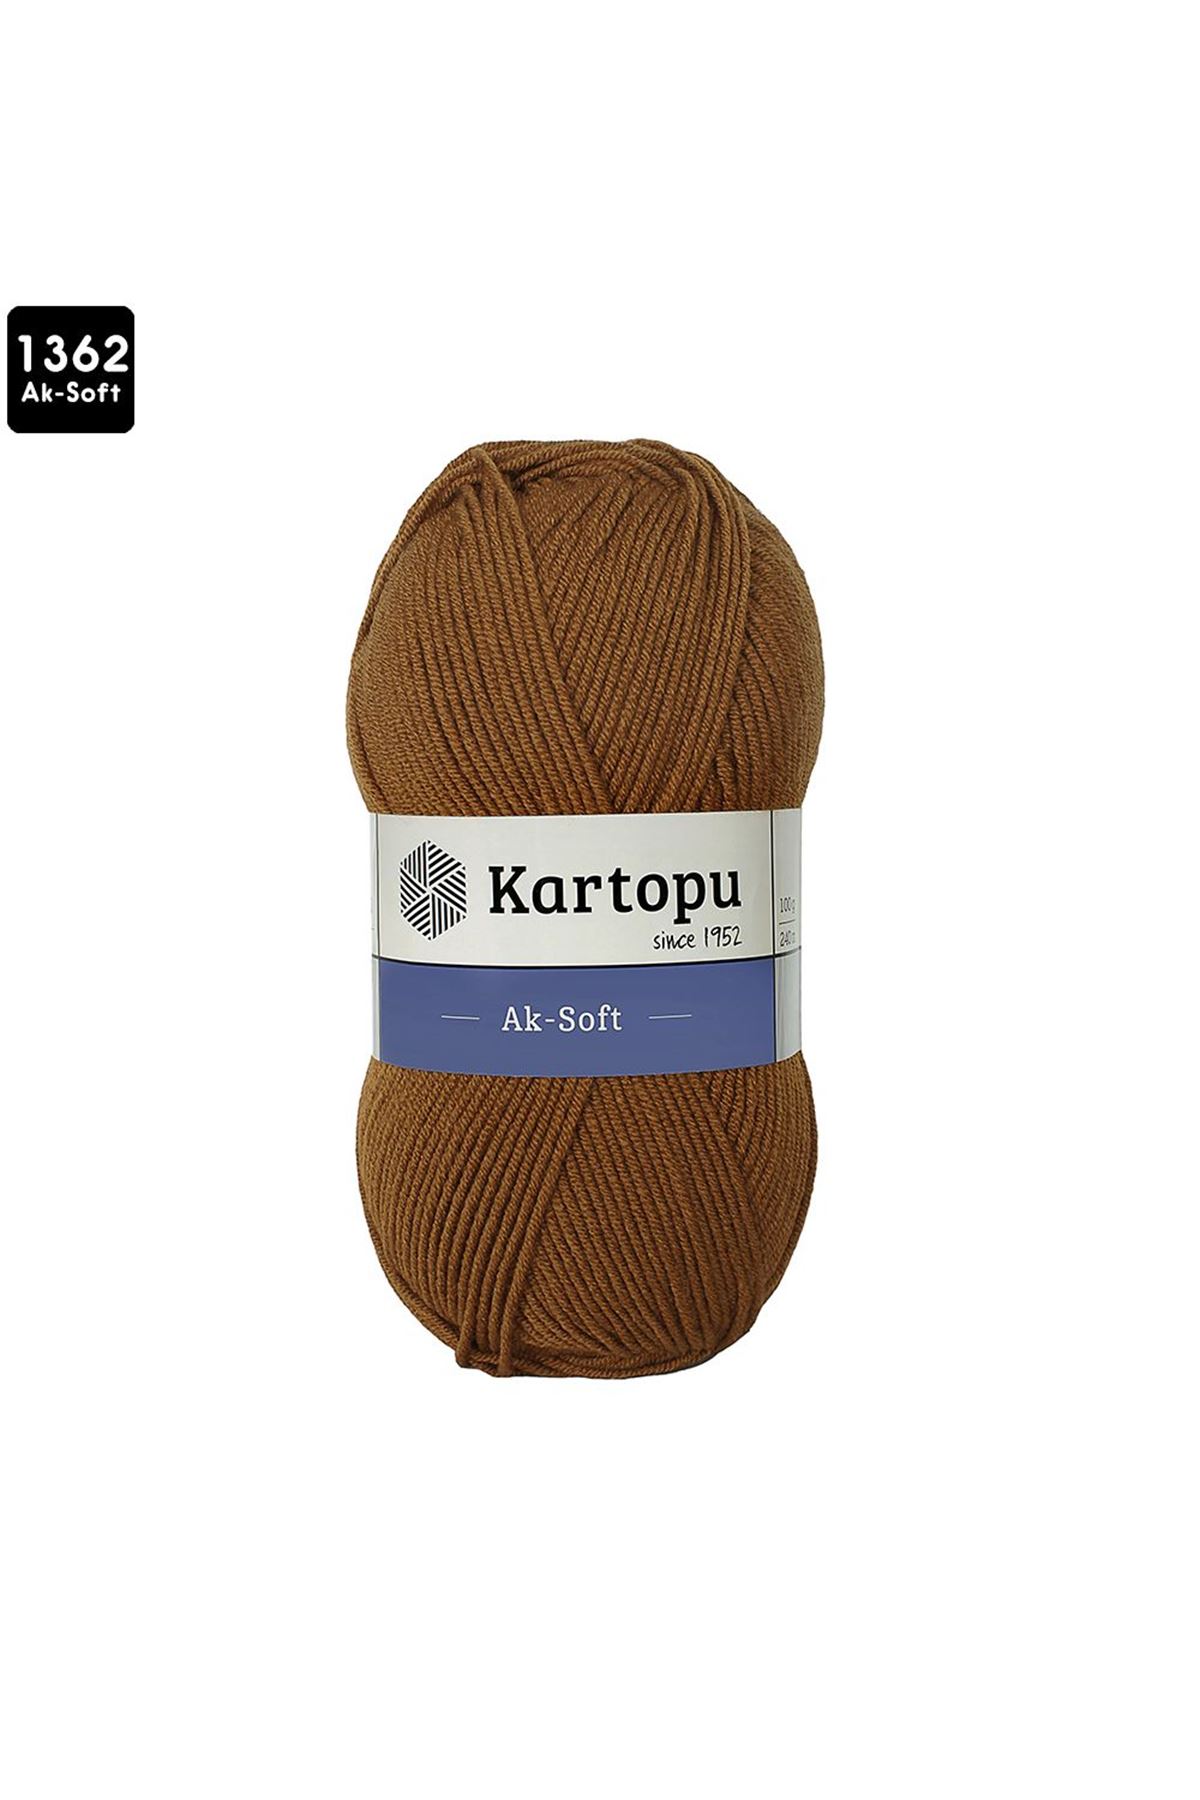 Kartopu Ak-Soft Renk No:1362